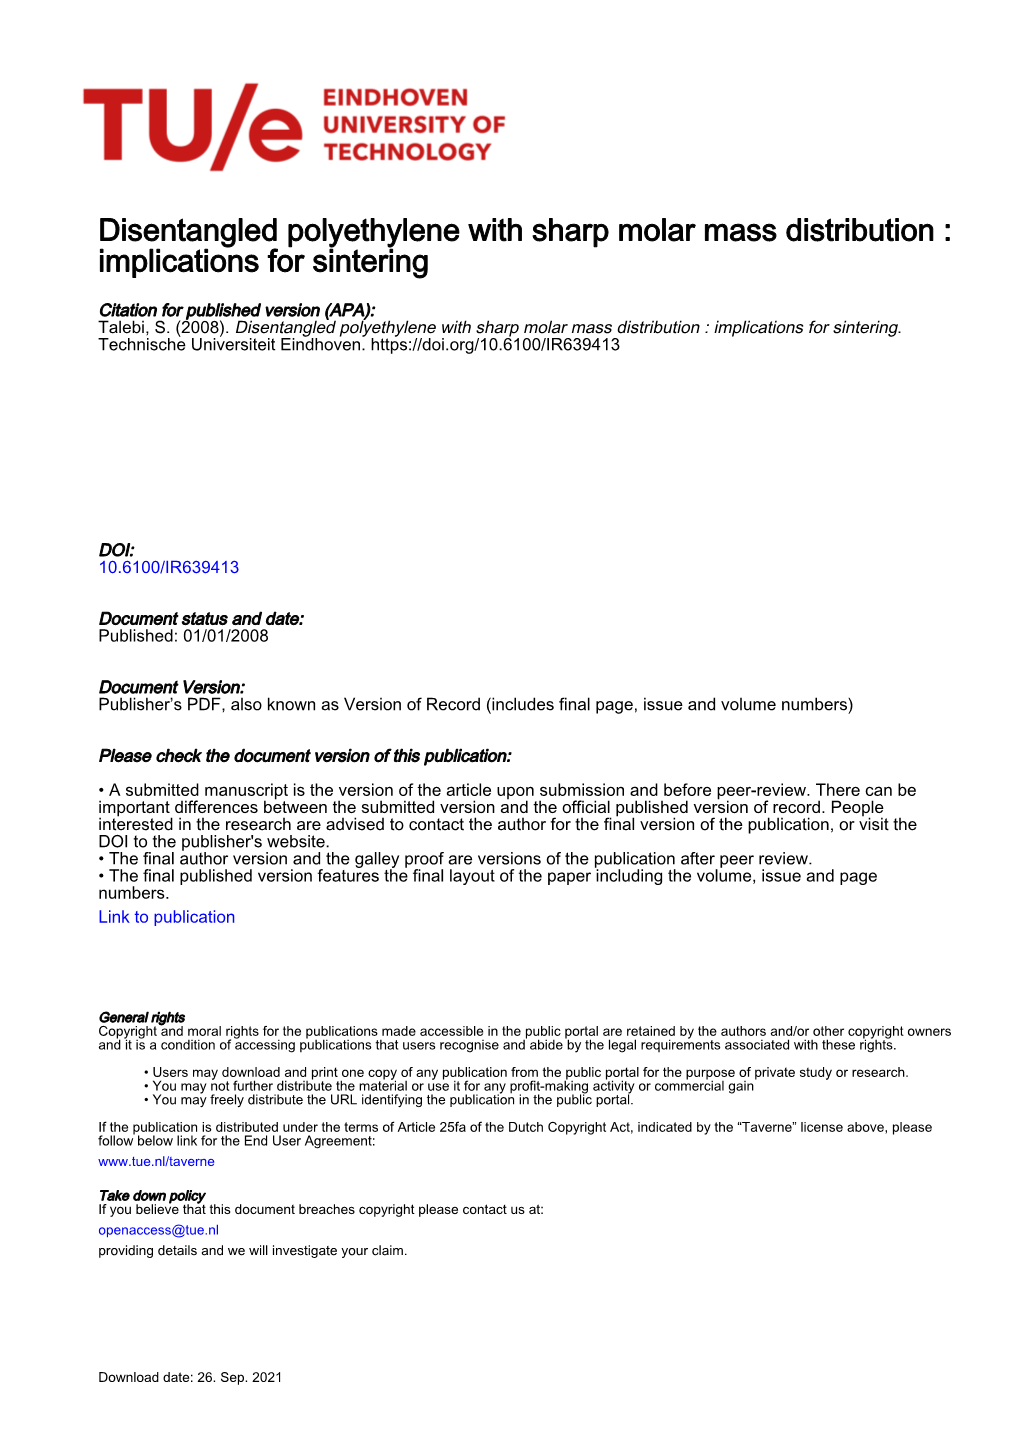 Disentangled Polyethylene with Sharp Molar Mass Distribution : Implications for Sintering